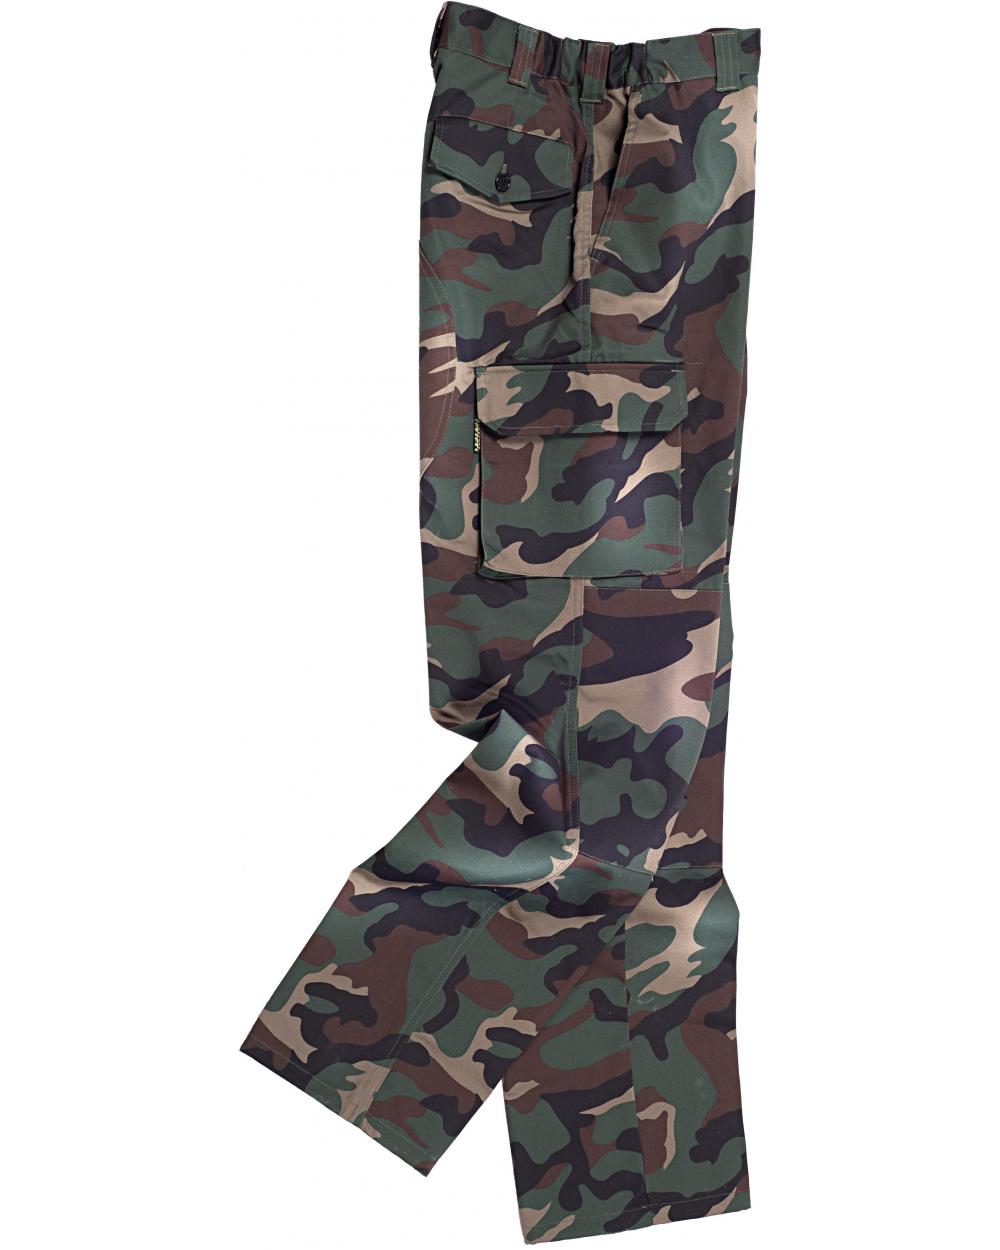 Comprar Pantalón de camuflaje multibolsillos S3350 Camuflaje online bataro